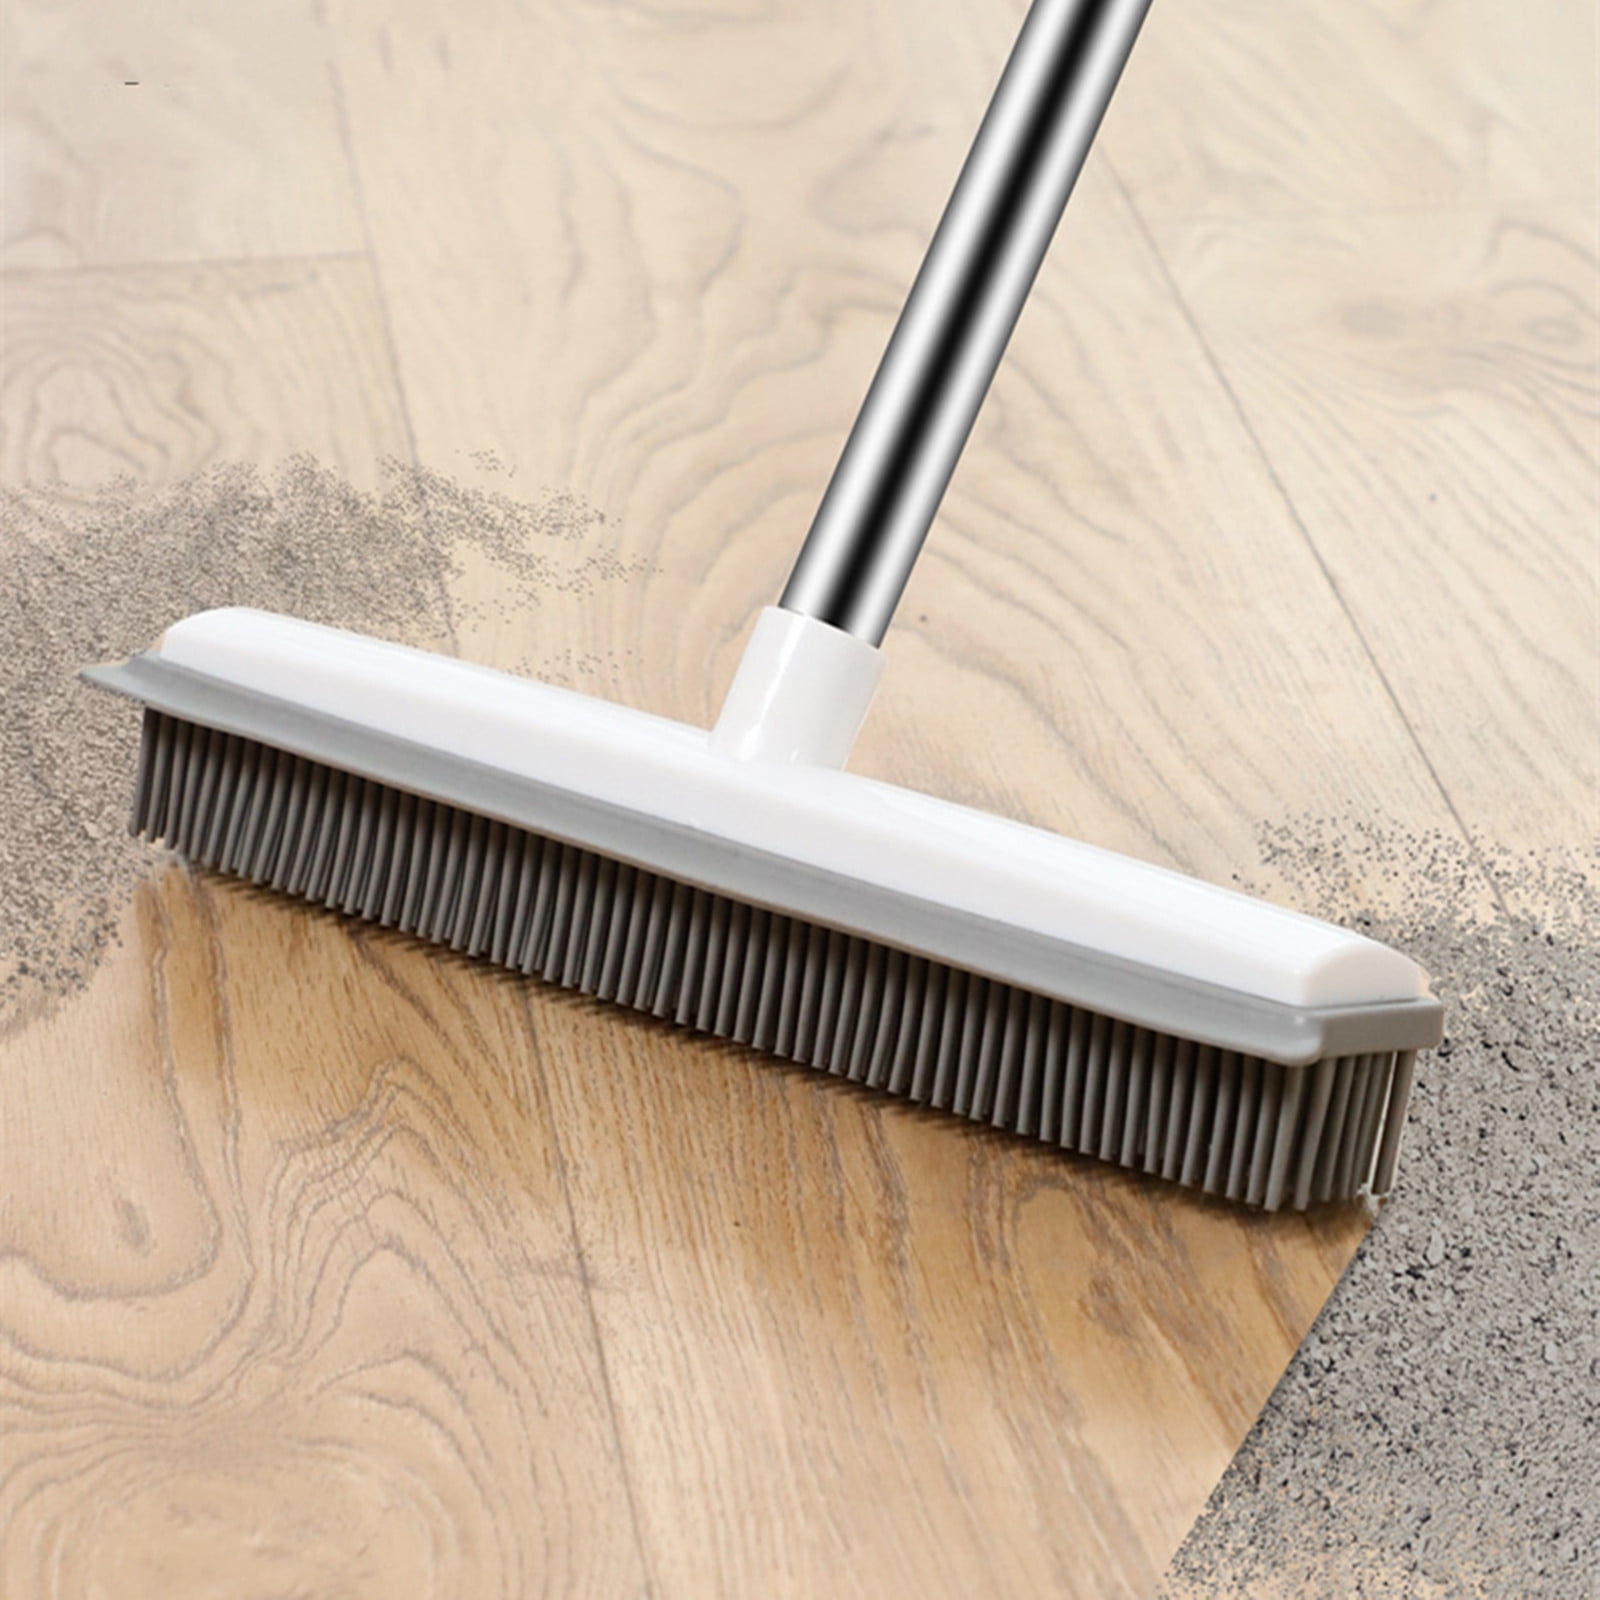 Homezo™ Gap Cleaning Brush (Buy 2 Get 1 FREE)